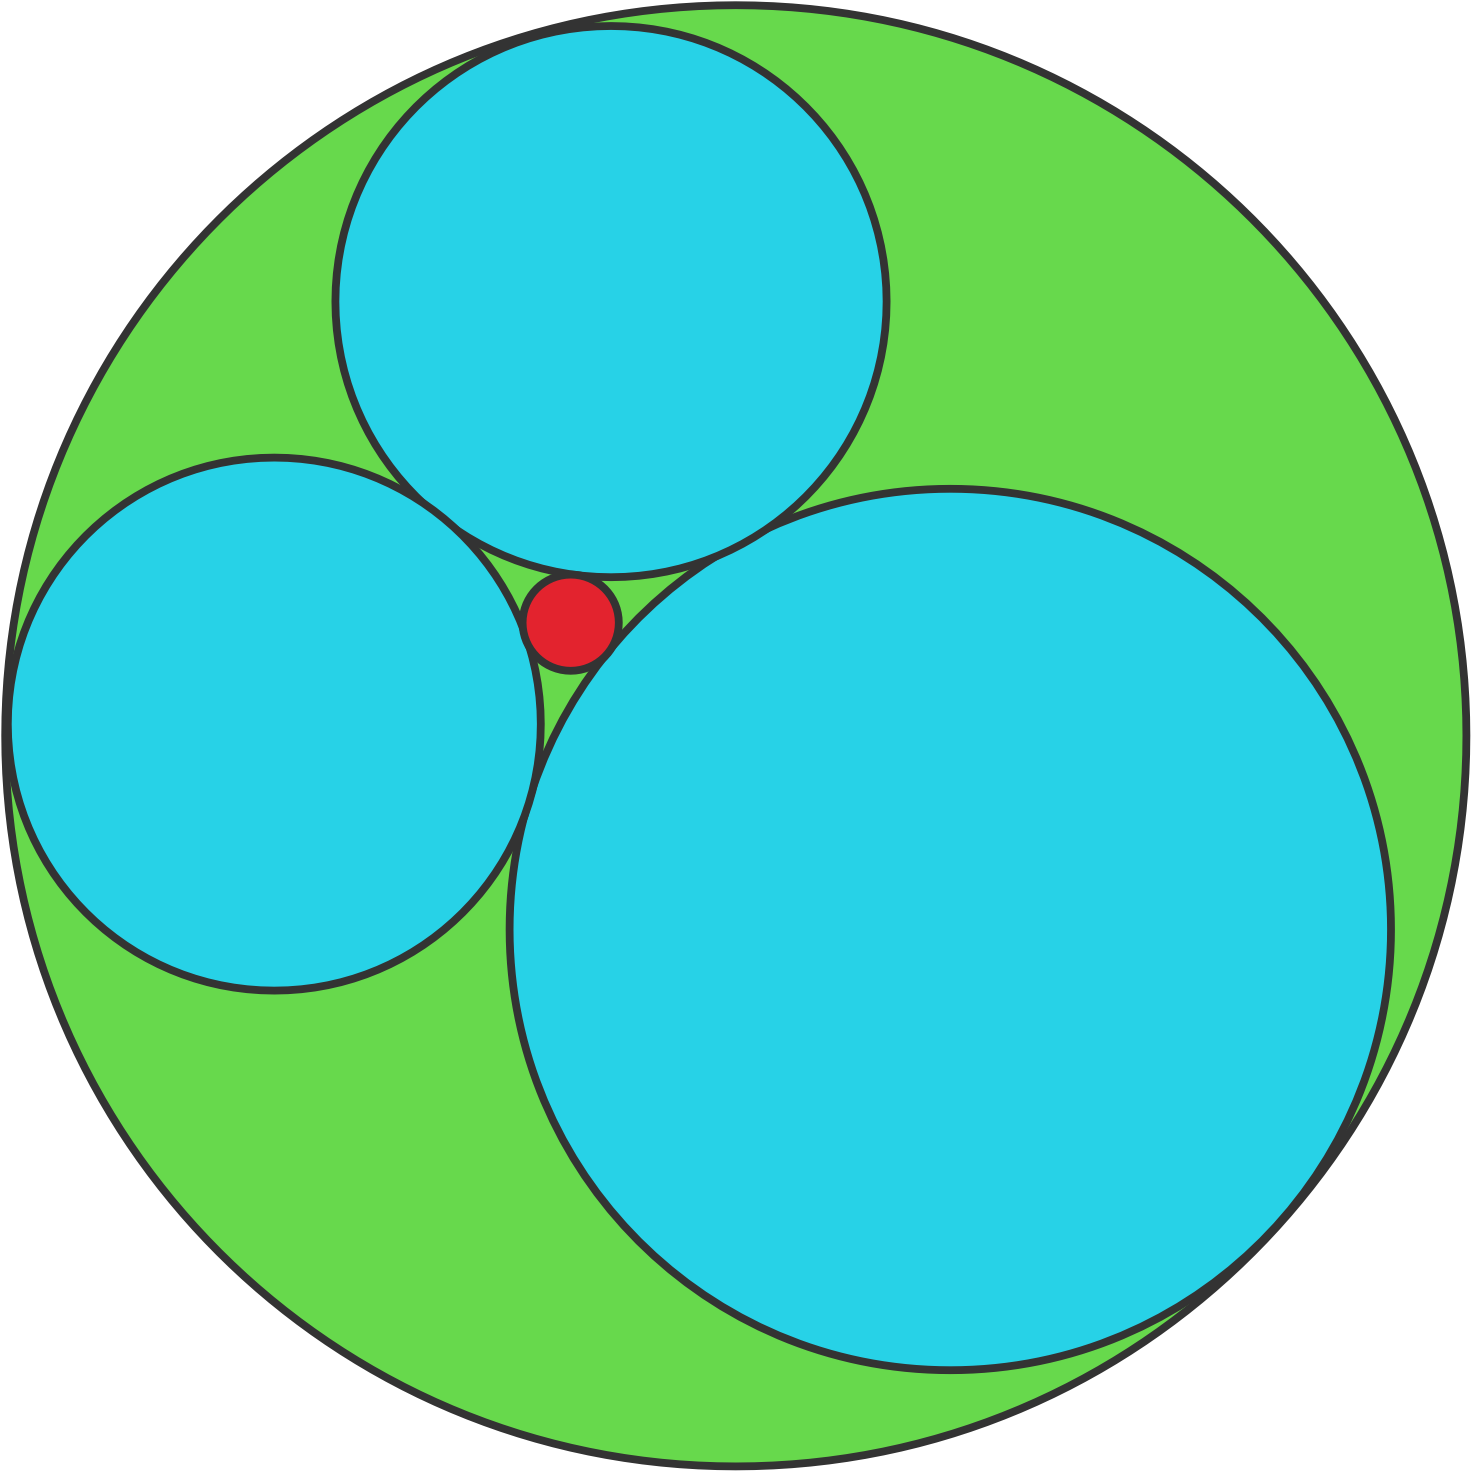 Descartes' Circle Theorem - Centro Psicopedagogico La Paz Zacatecoluca (1472x1472)